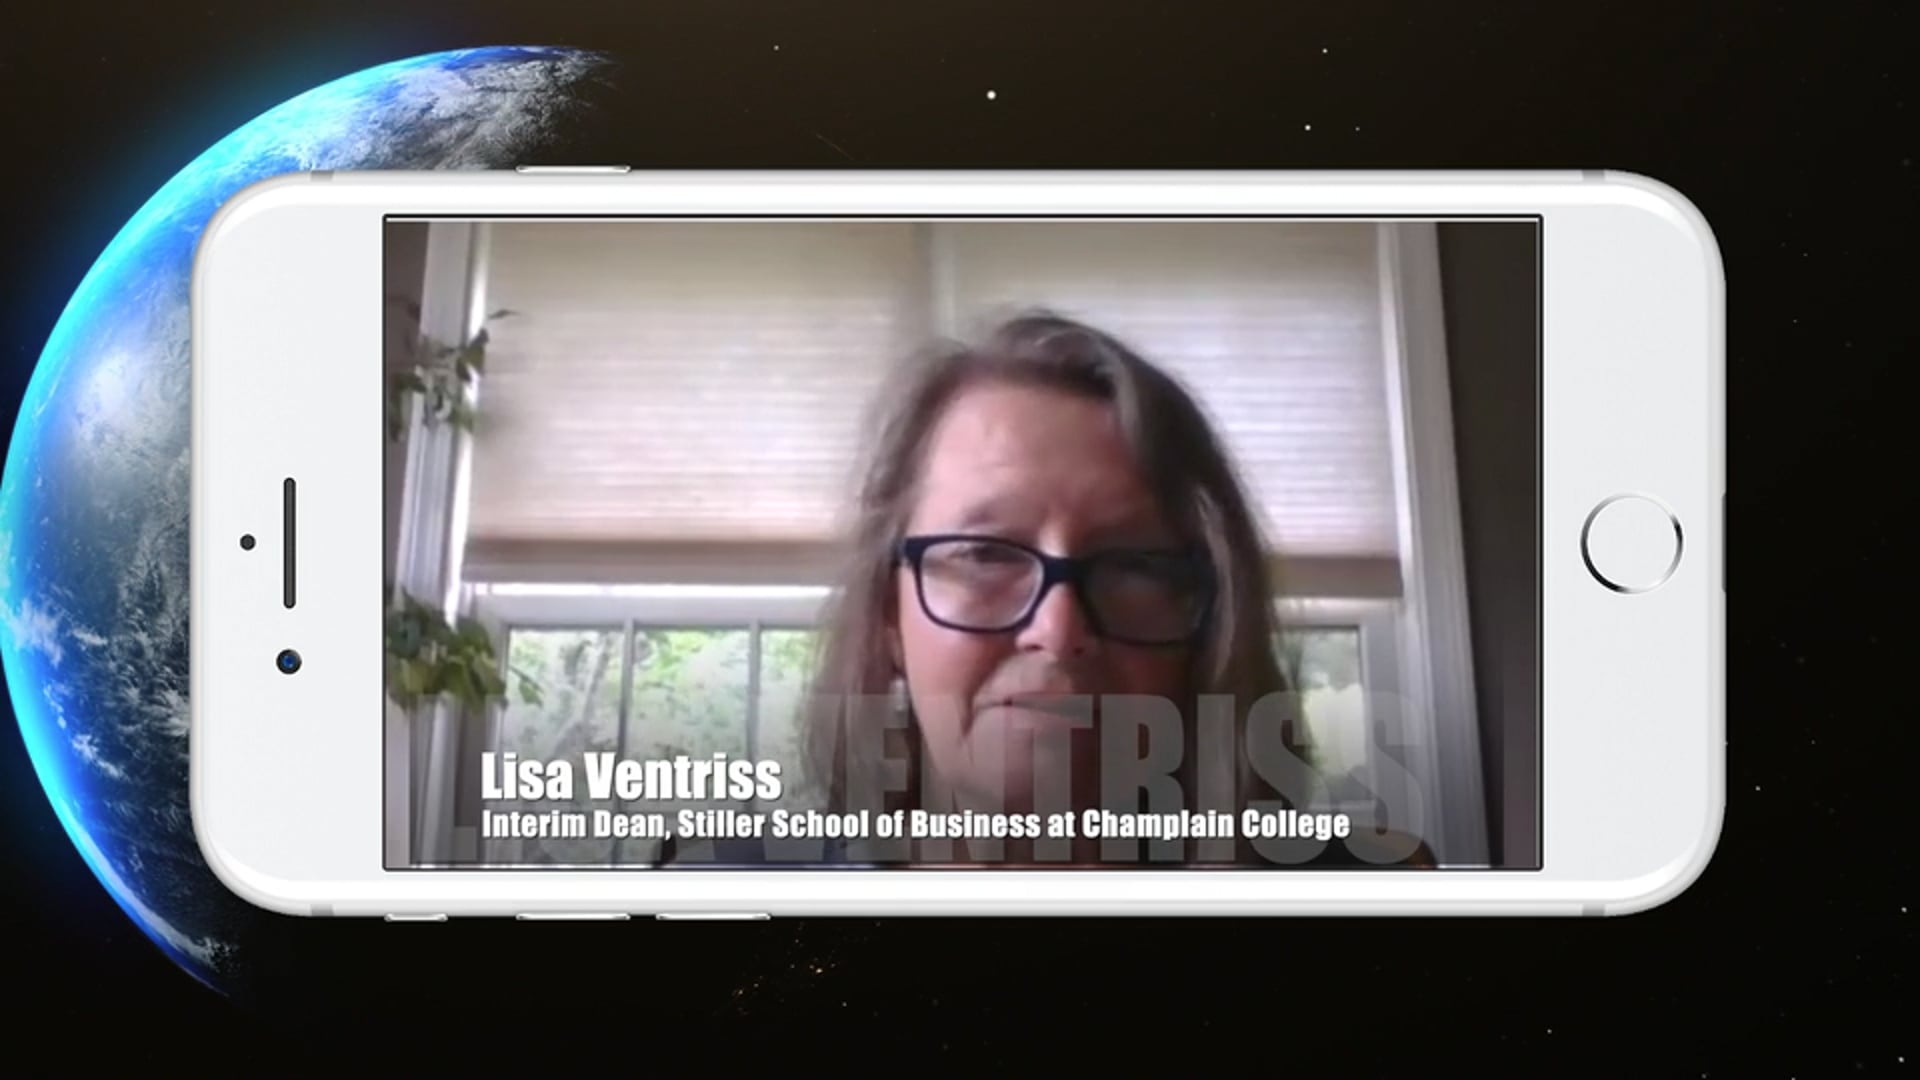 Lisa Ventriss - Interim Dean, Stiller School of Business at Champlain College